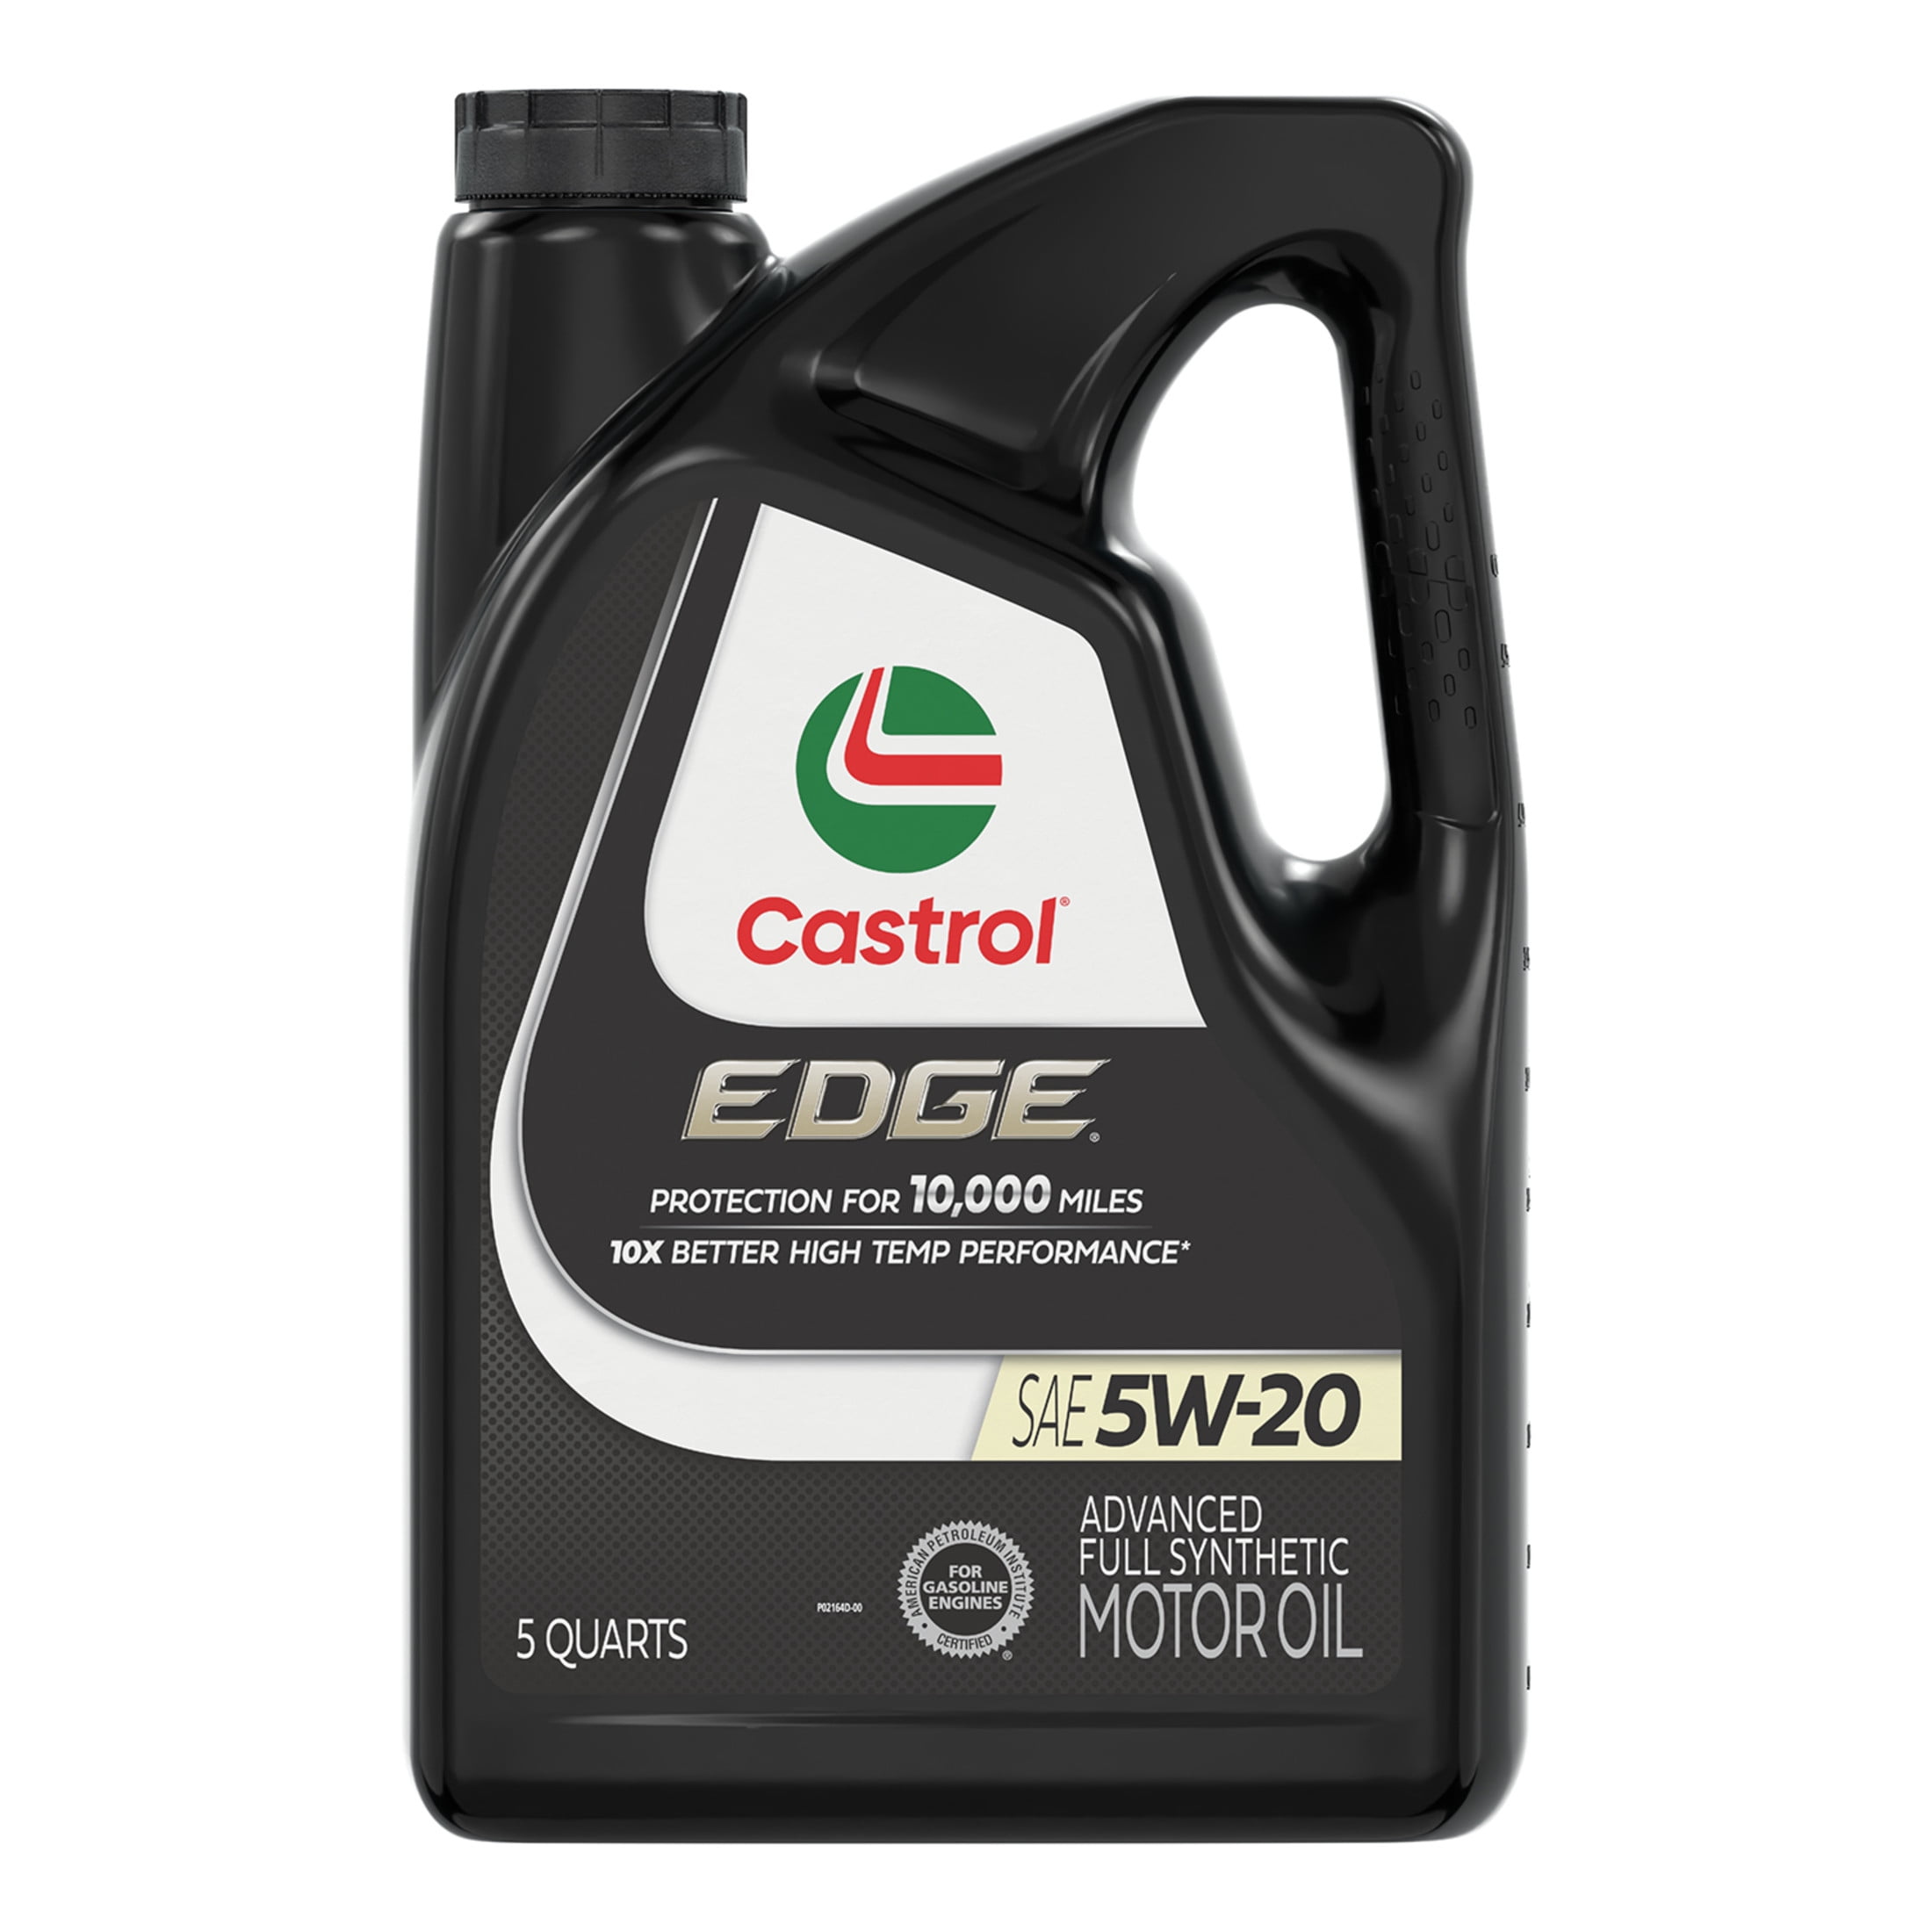 Castrol EDGE 5W-20 Advanced Full Synthetic Motor Oil